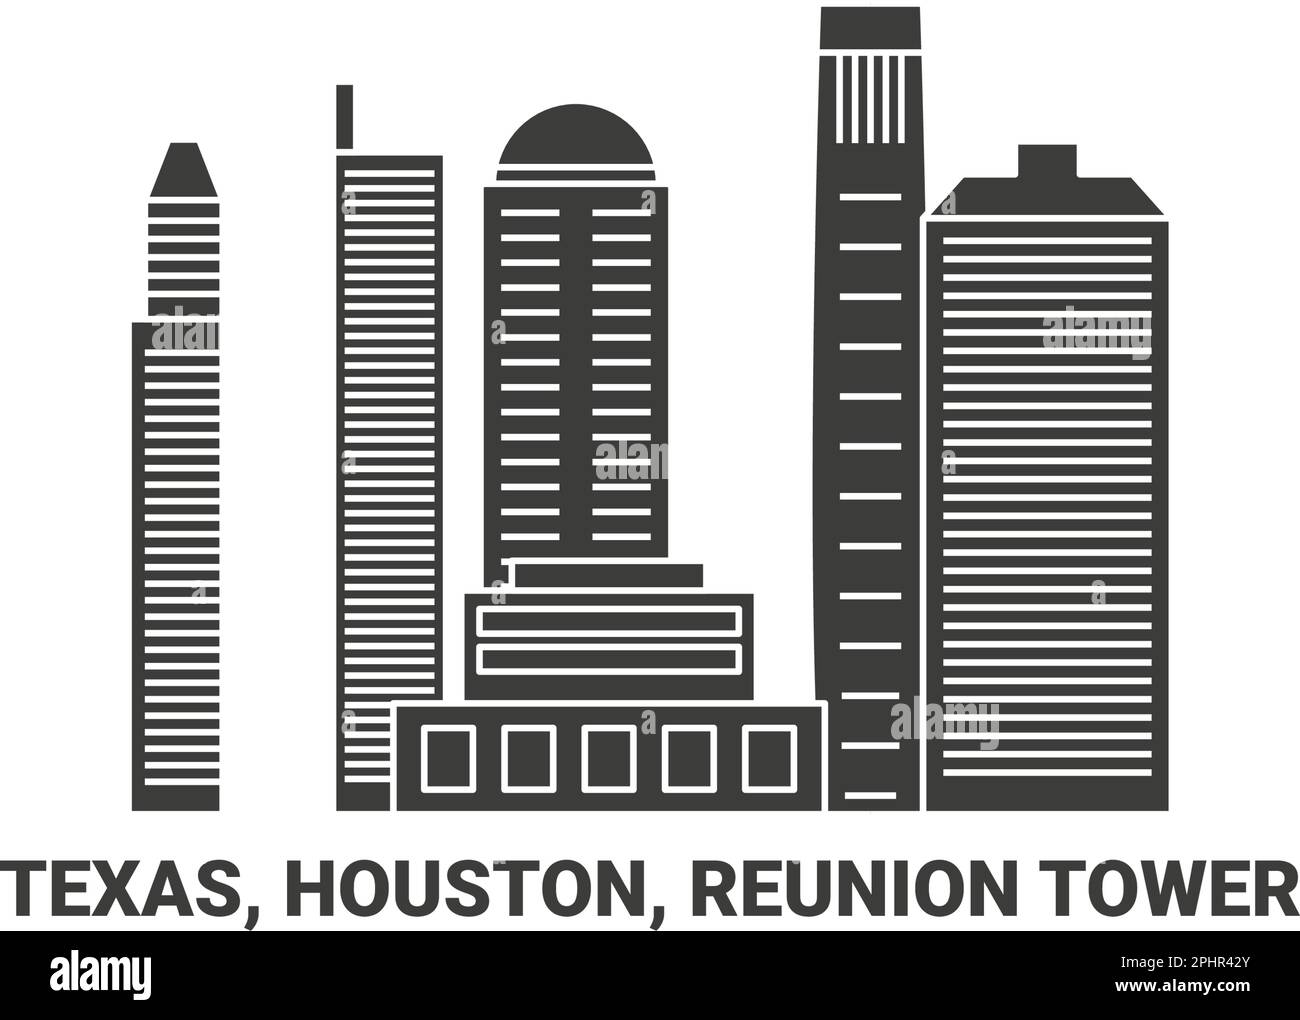 United States, Texas, Houston, Reunion Tower, travel landmark vector illustration Stock Vector